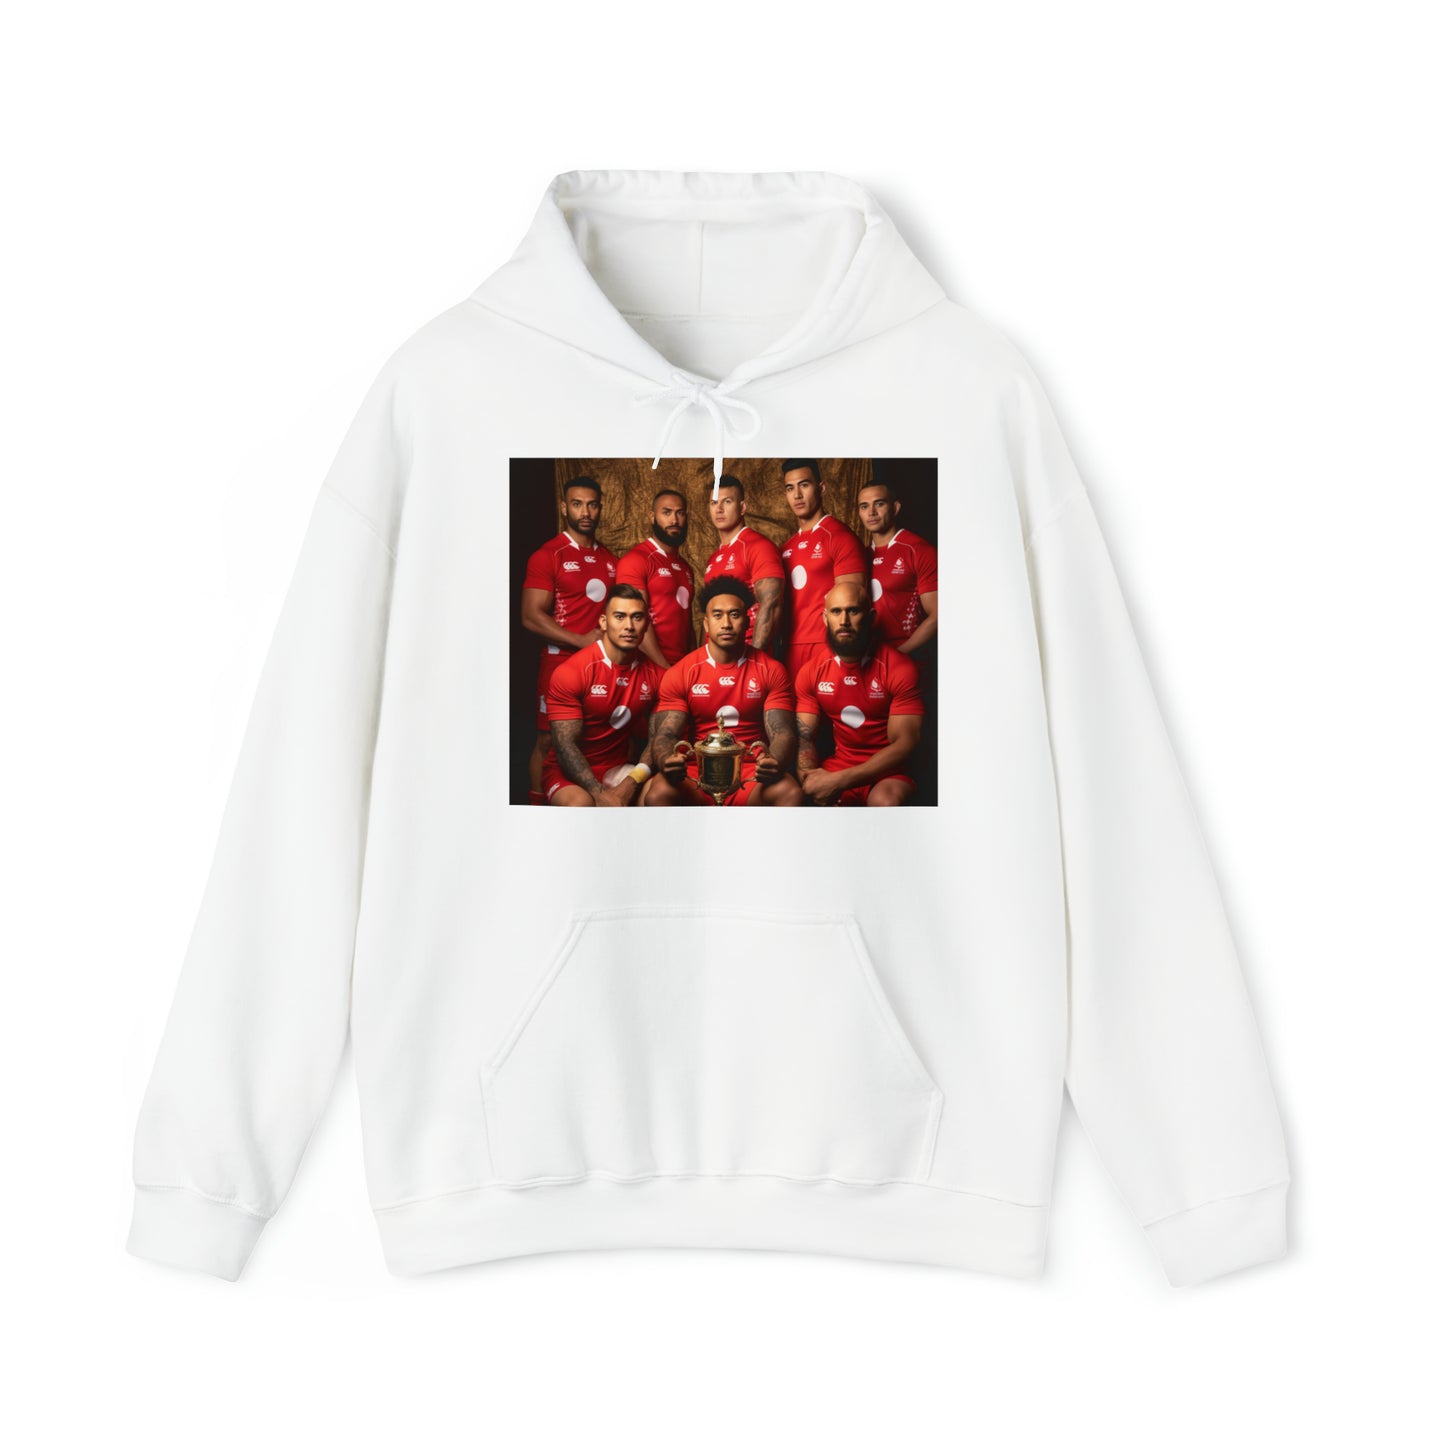 Tonga RWC photoshoot - light hoodies